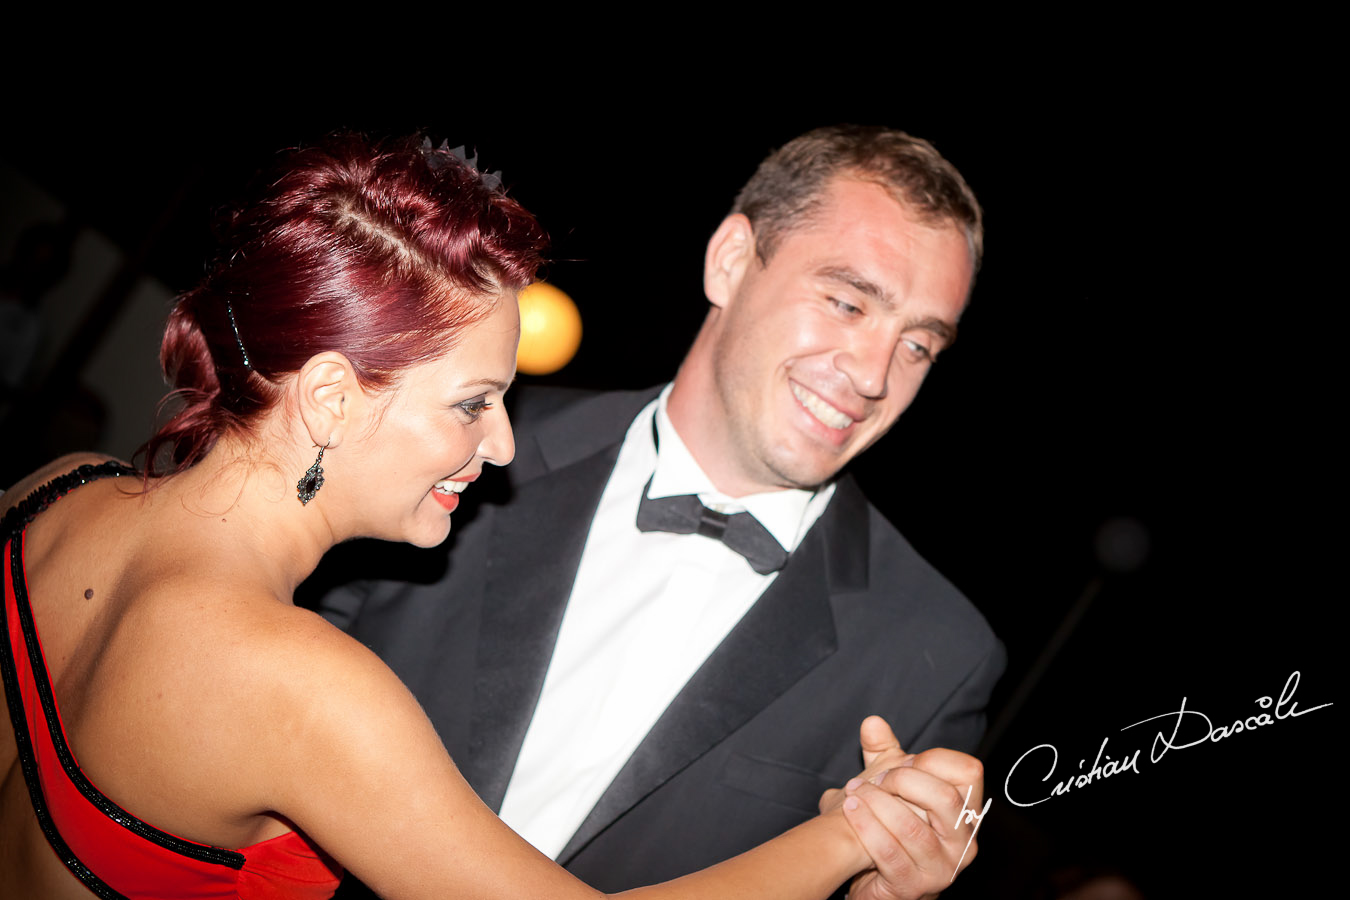 Vlad & Anca - A beautiful Wedding in Larnaka. Professional Photographer: Cristian Dascalu